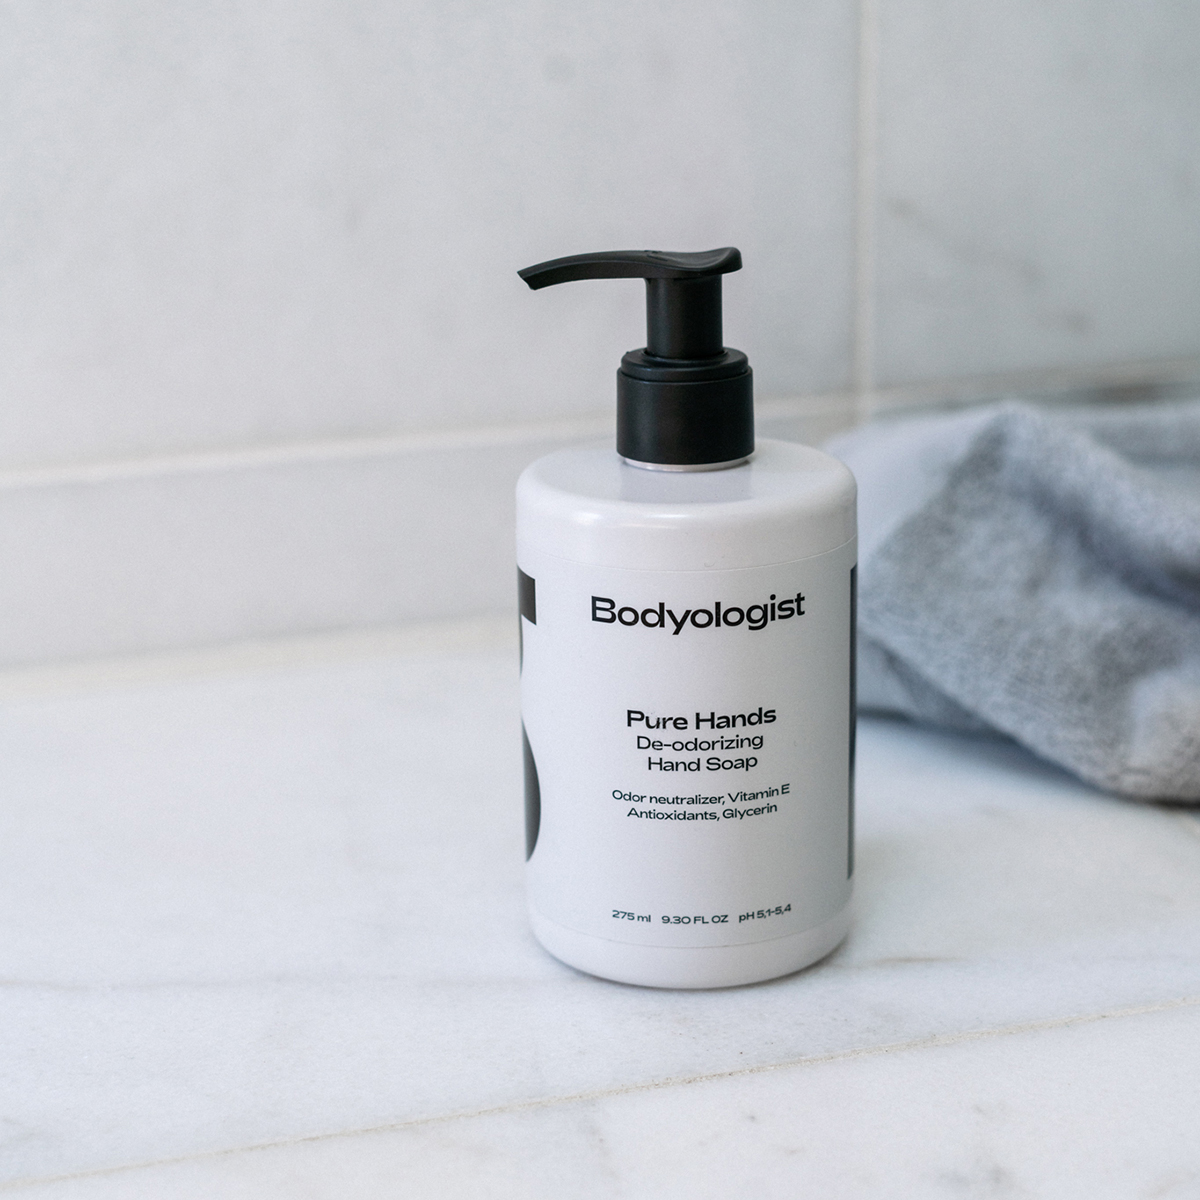 Bodyologist - Pure Hands De-odorizing Hand Soap